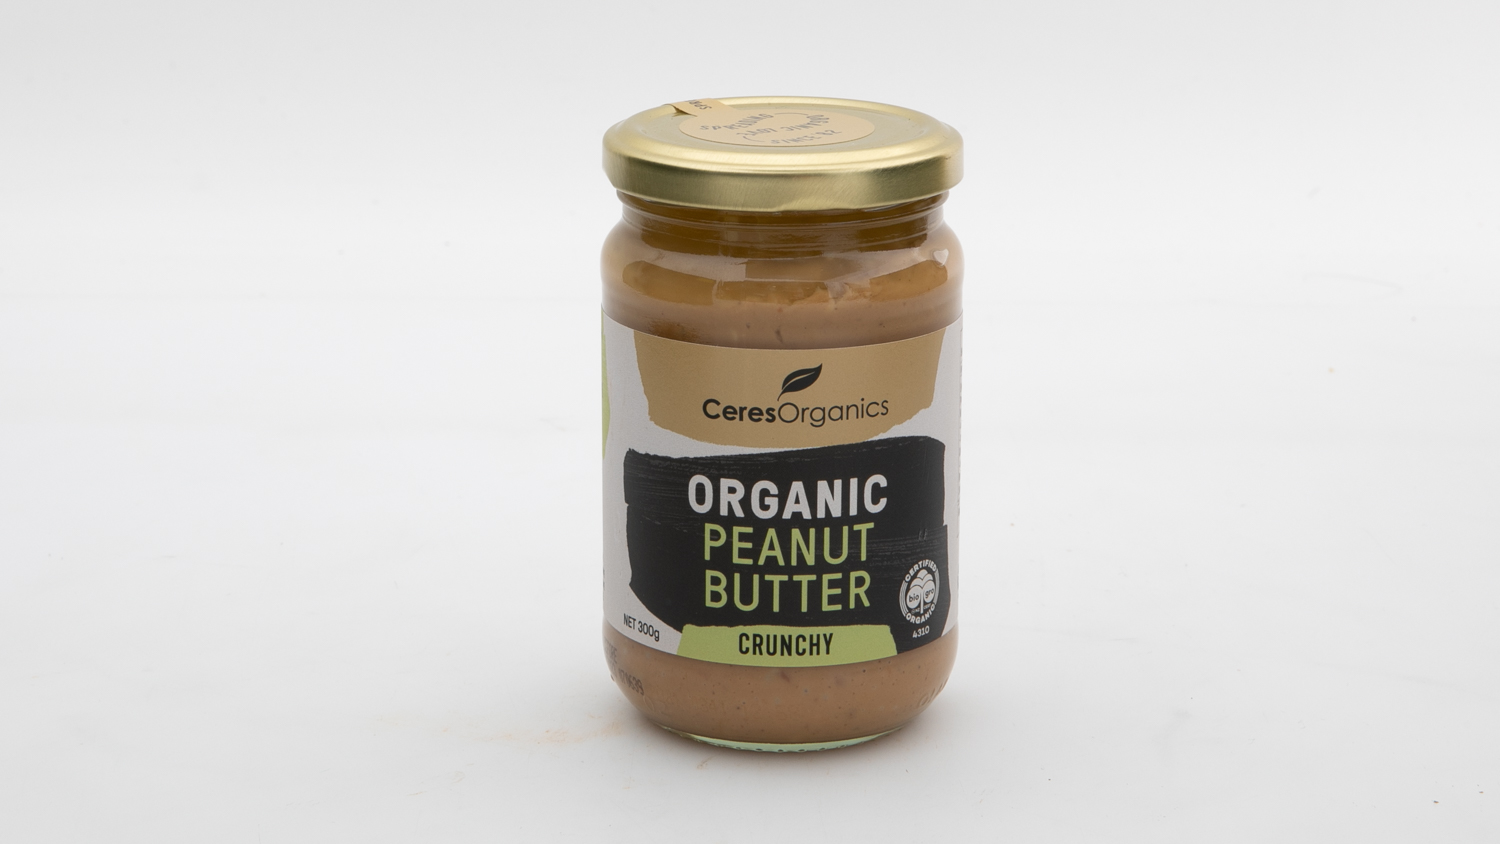 Ceres Organics Organic Peanut Butter Crunchy carousel image